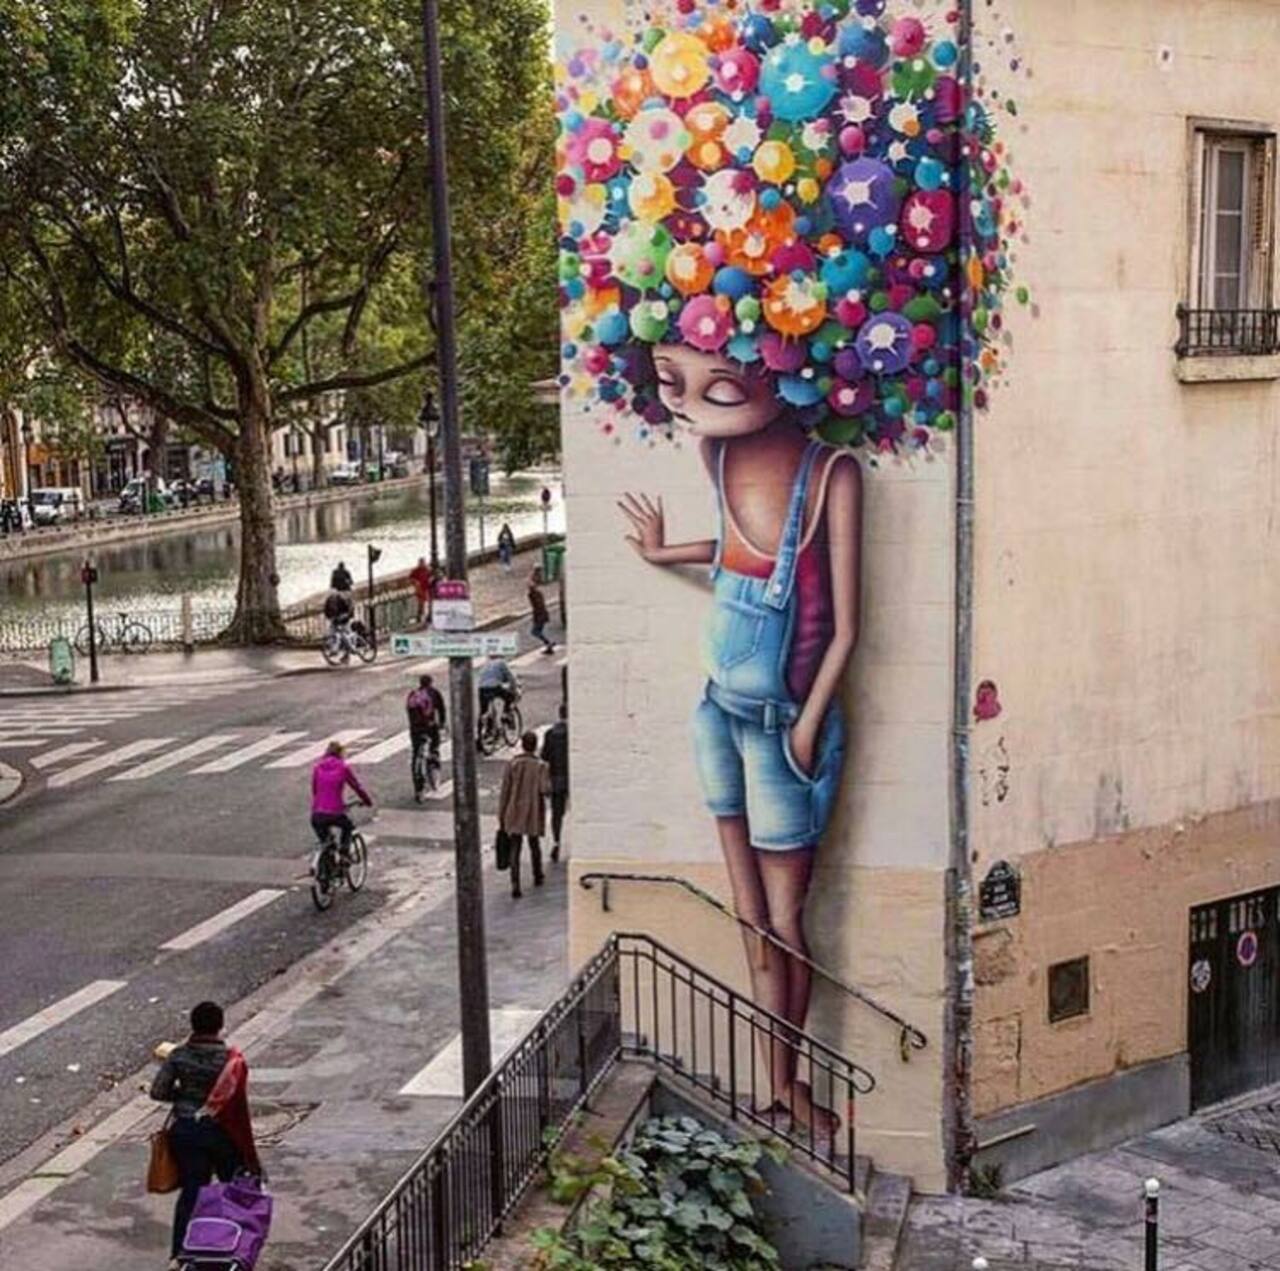 This gorgeous piece was painted by @VinieGraffiti (http://globalstreetart.com/vinie) in #Paris, #France. What a stunning sight! -- #globalstreetart #streetart #art #graffiti https://t.co/YP8ElXu92C